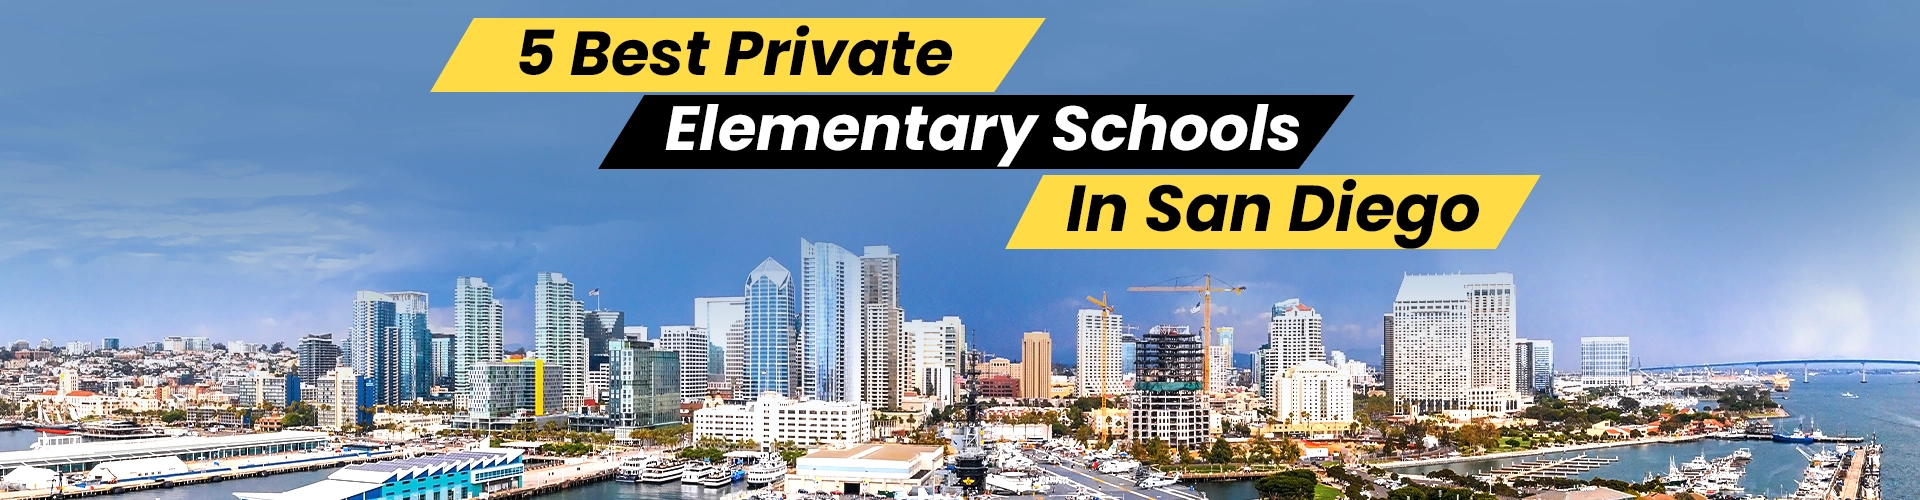 best-private-elementary-schools-san-diego